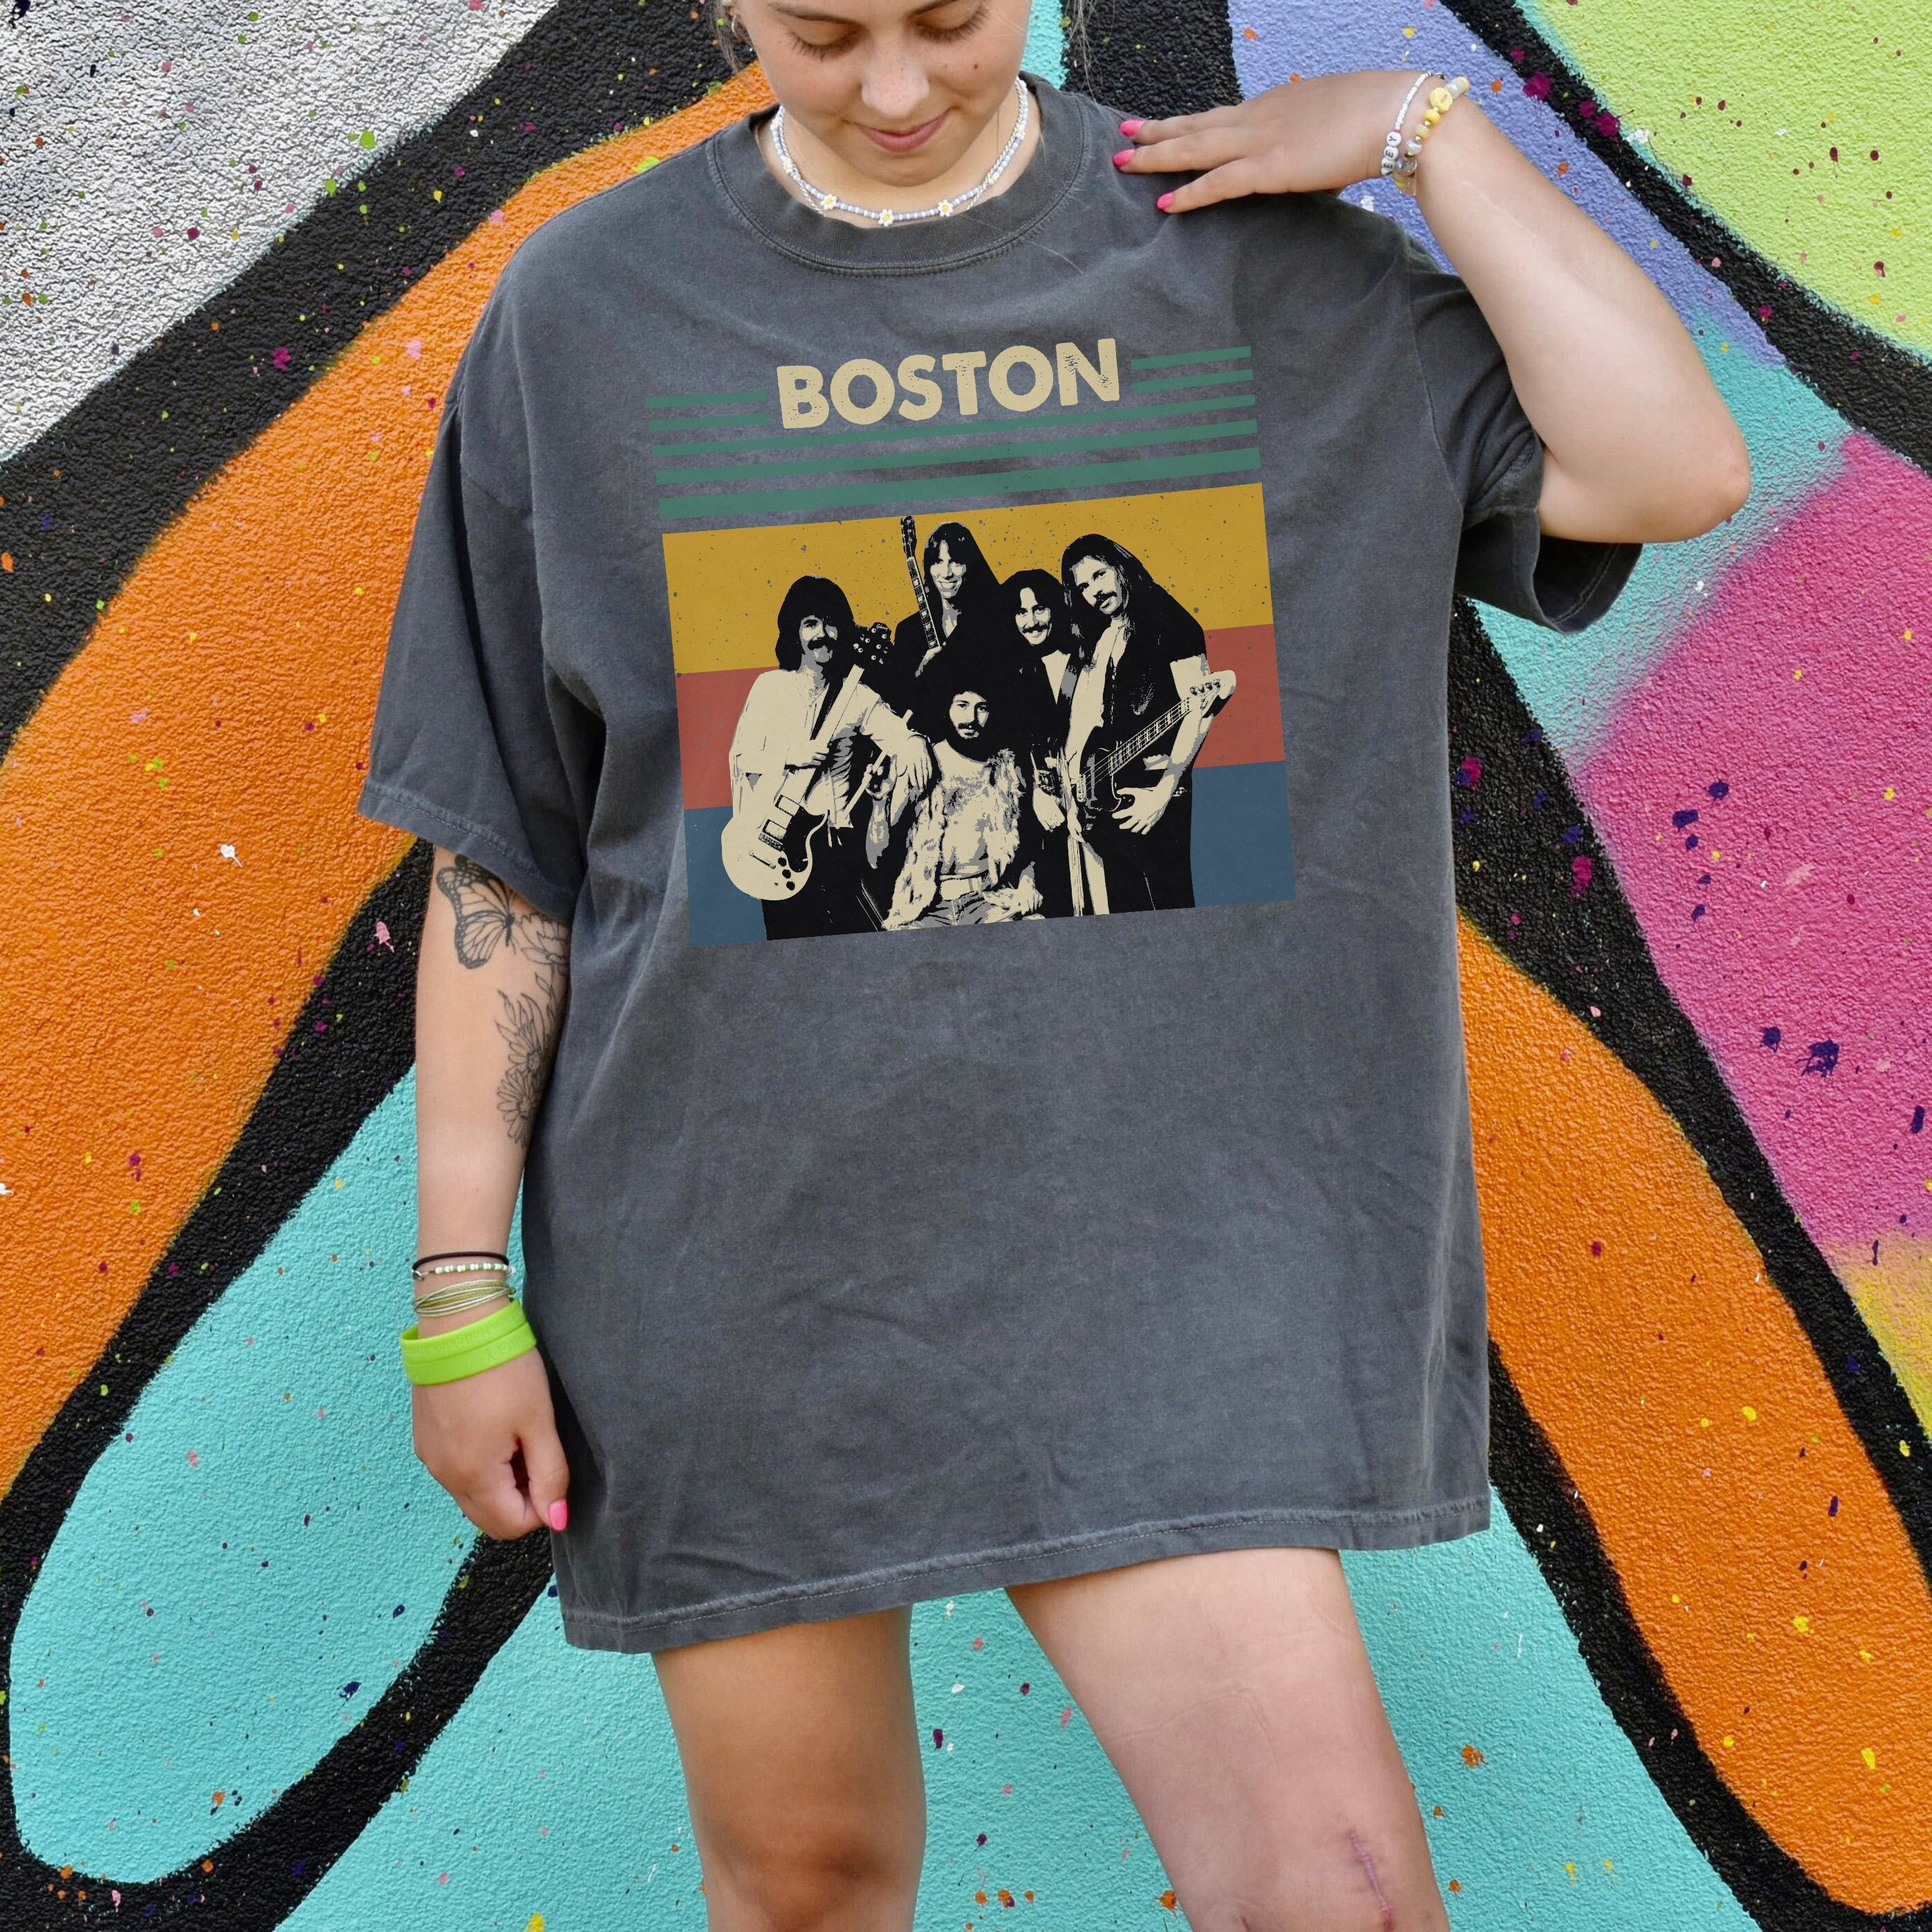 Vintage Boston US Tour T-Shirt